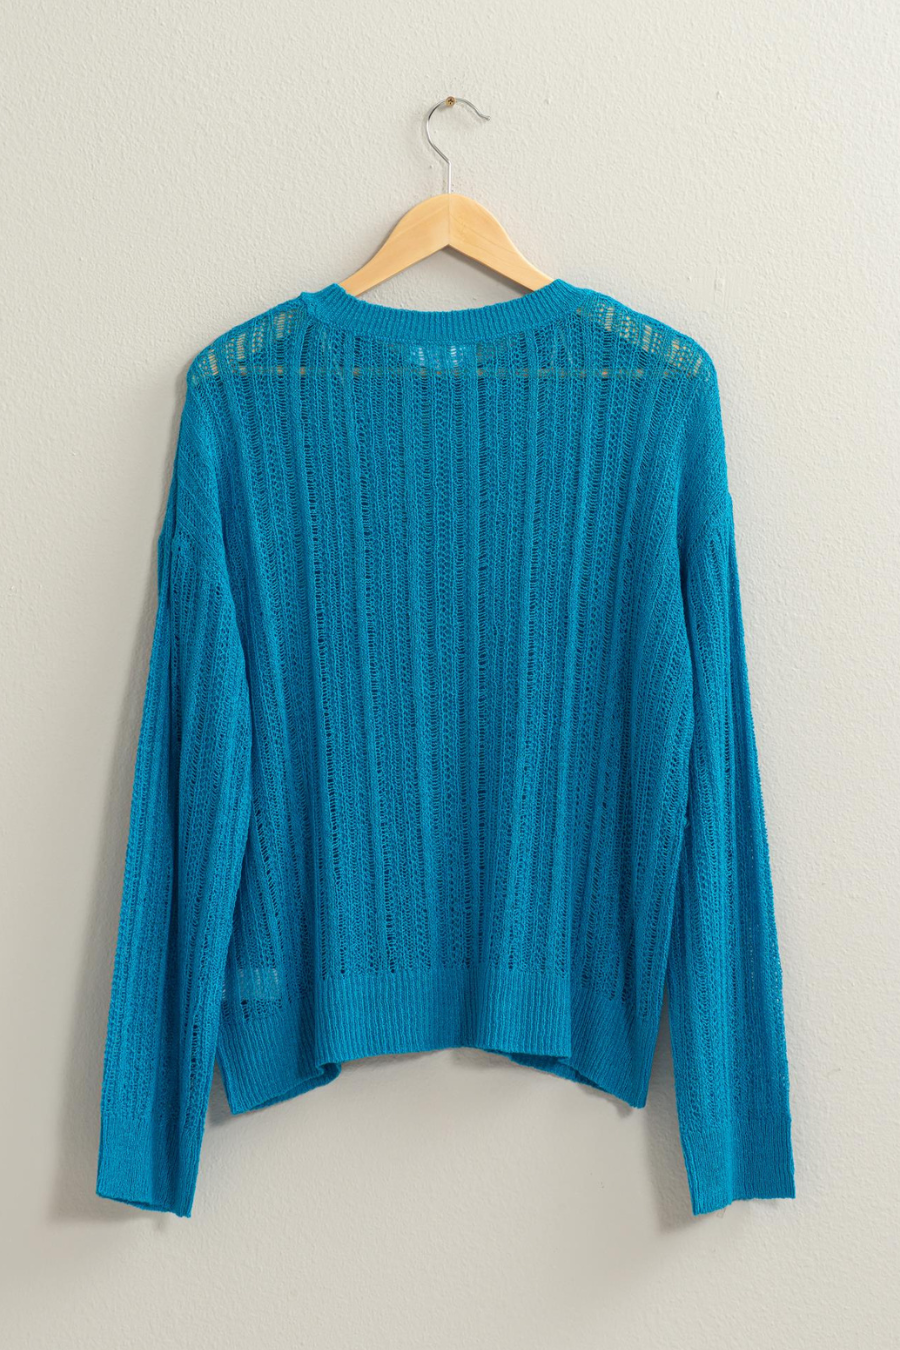 back view of blue Lottie sweater on a wooden hanger 